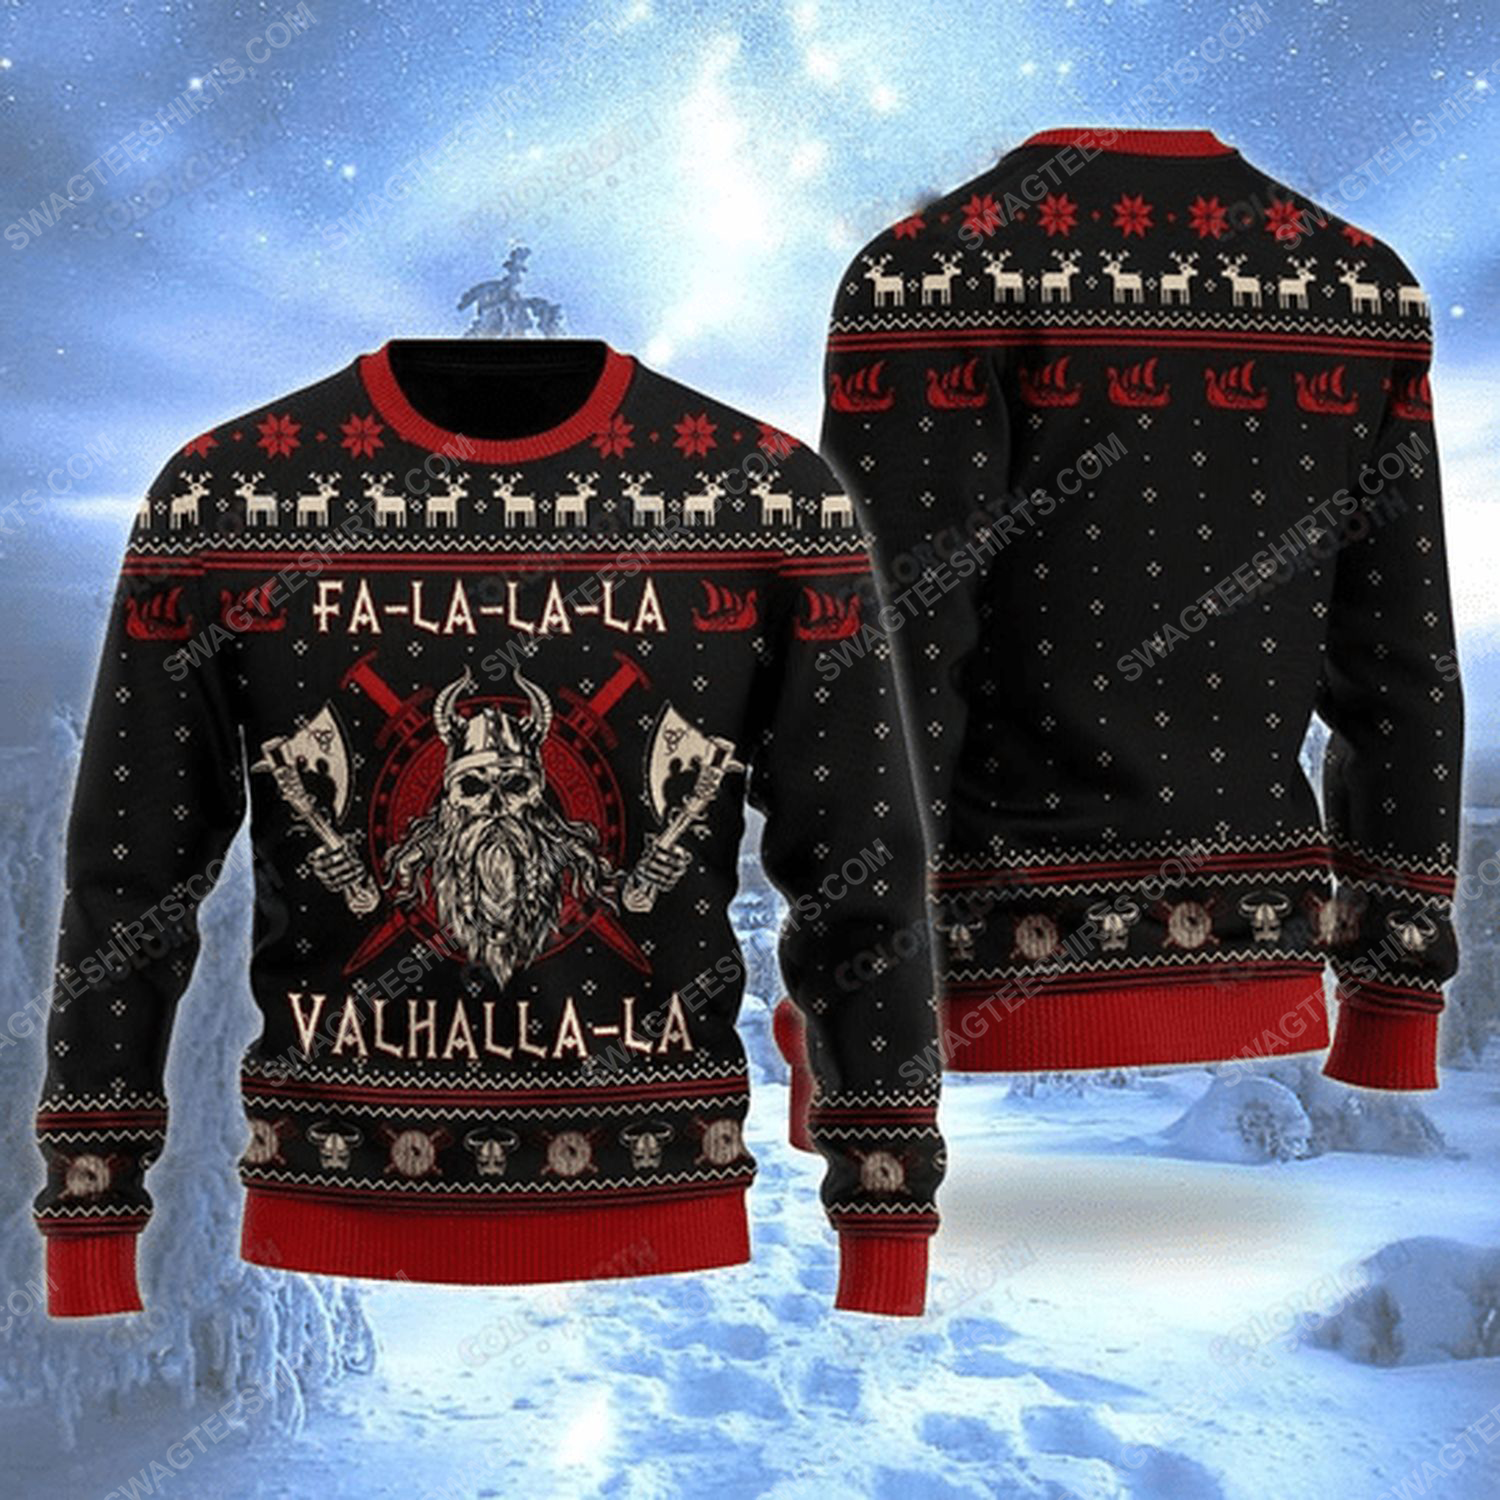 Viking fa-la-la-la valhalla ugly christmas sweater